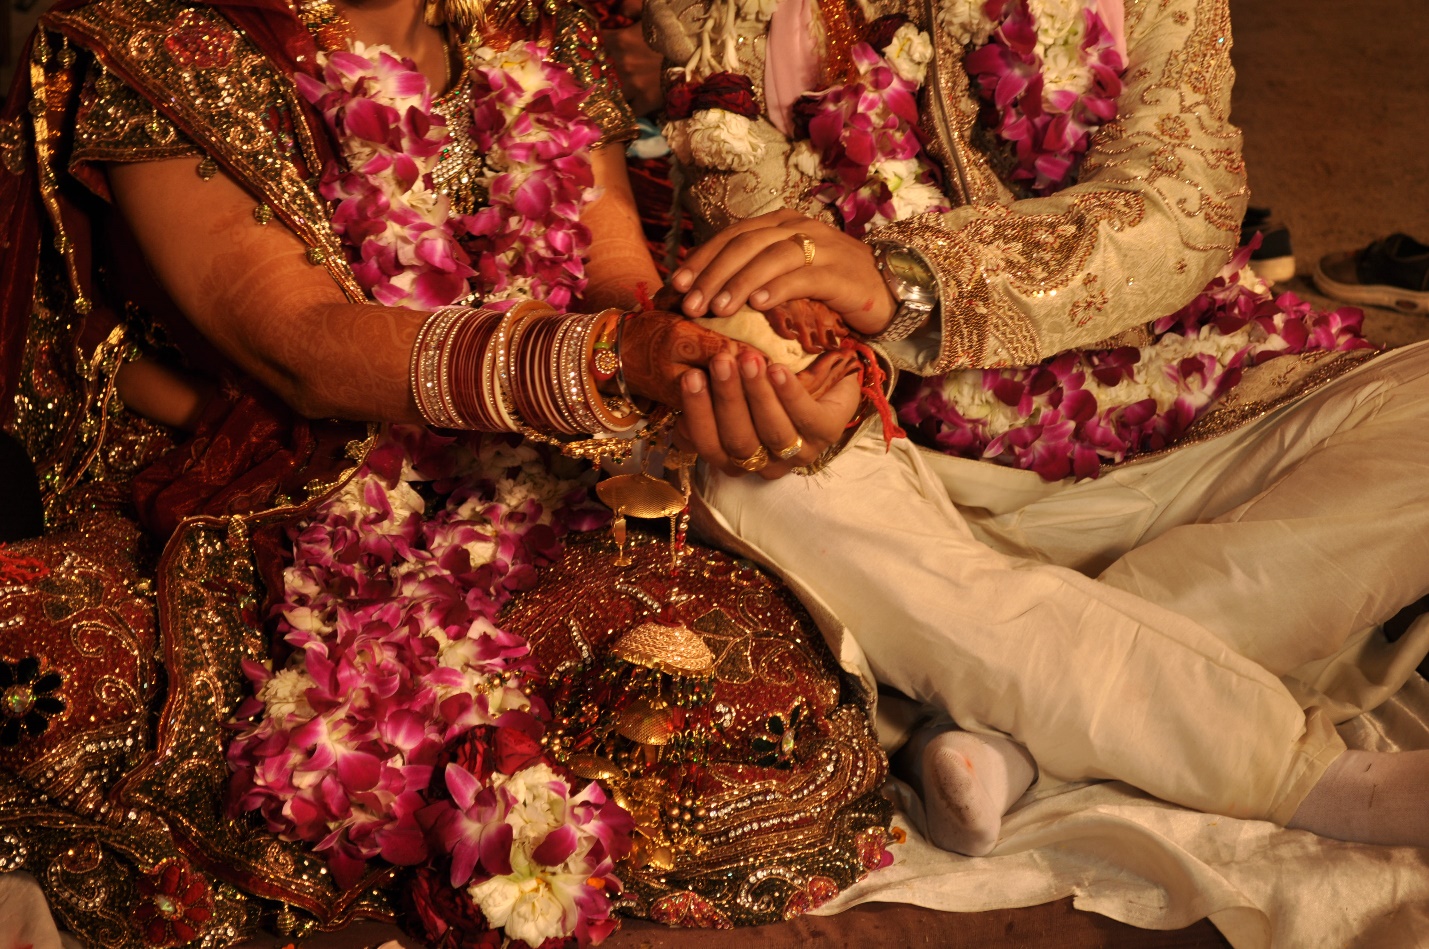 https://upload.wikimedia.org/wikipedia/commons/b/bd/Indian_wedding_Delhi.jpg